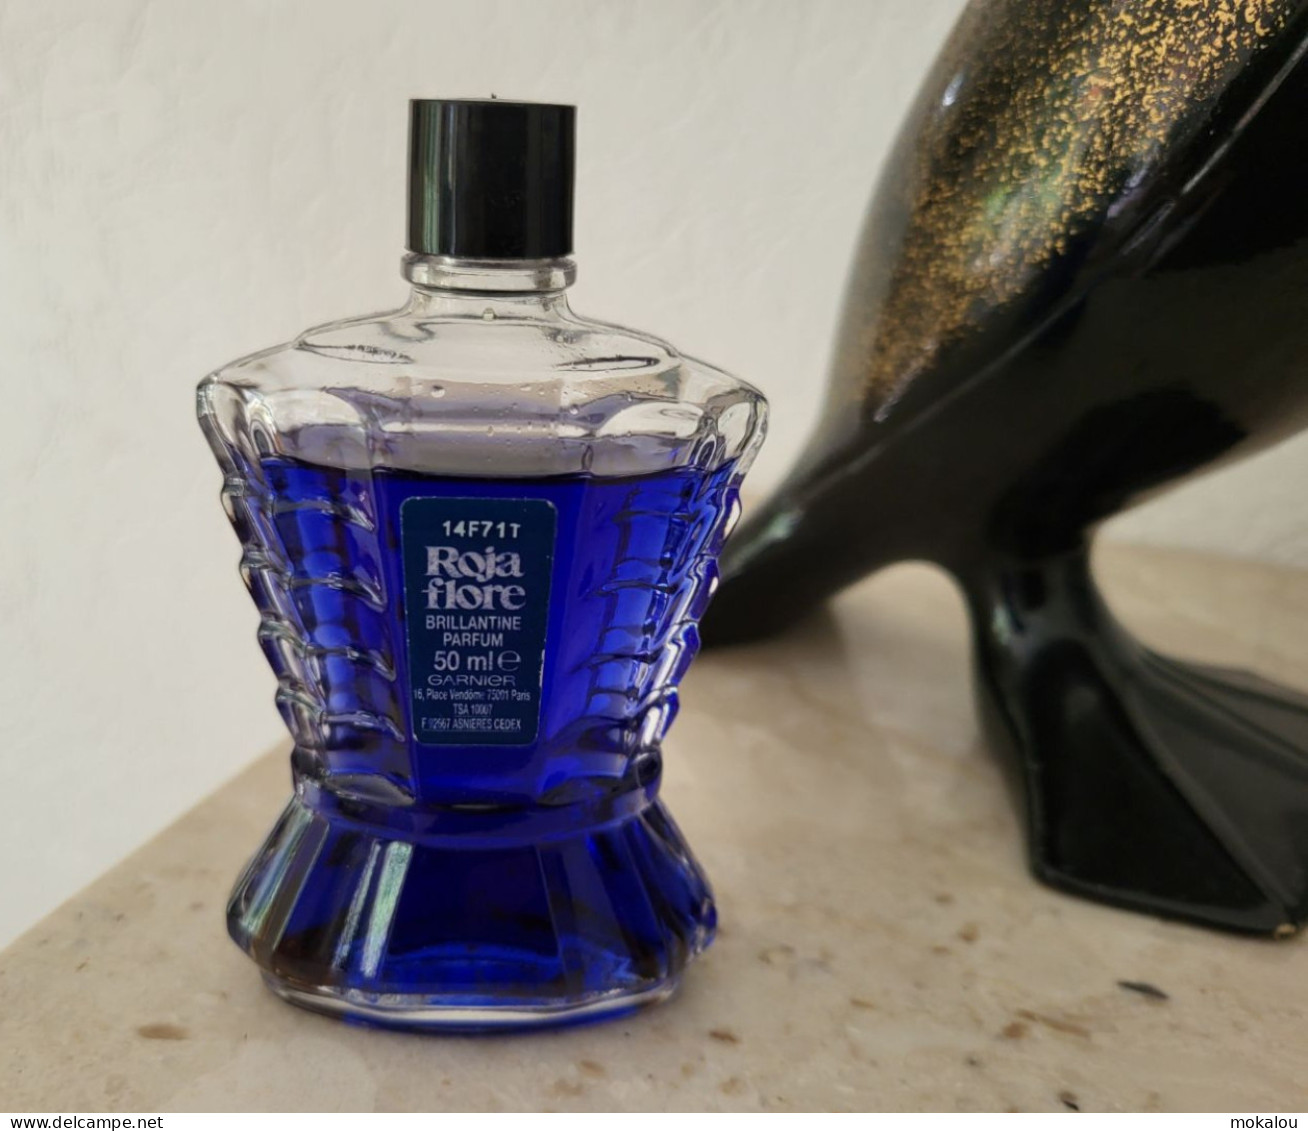 Flacon Forvil Rosa Flore Brillantine Parfum 50ml - Femme